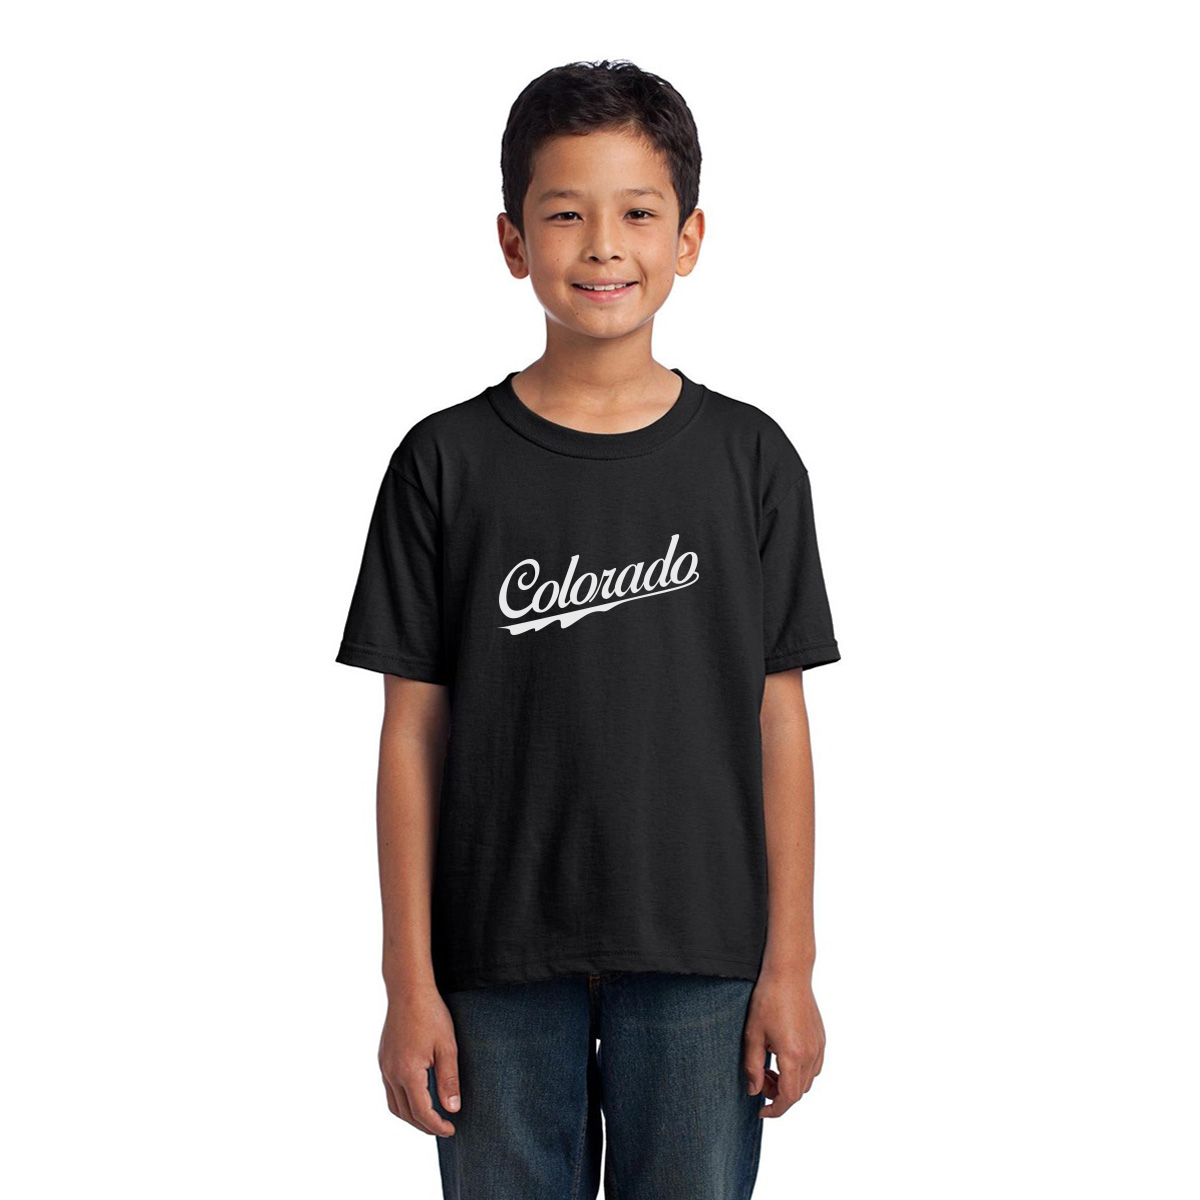 Colorado Kids T-shirt | Black